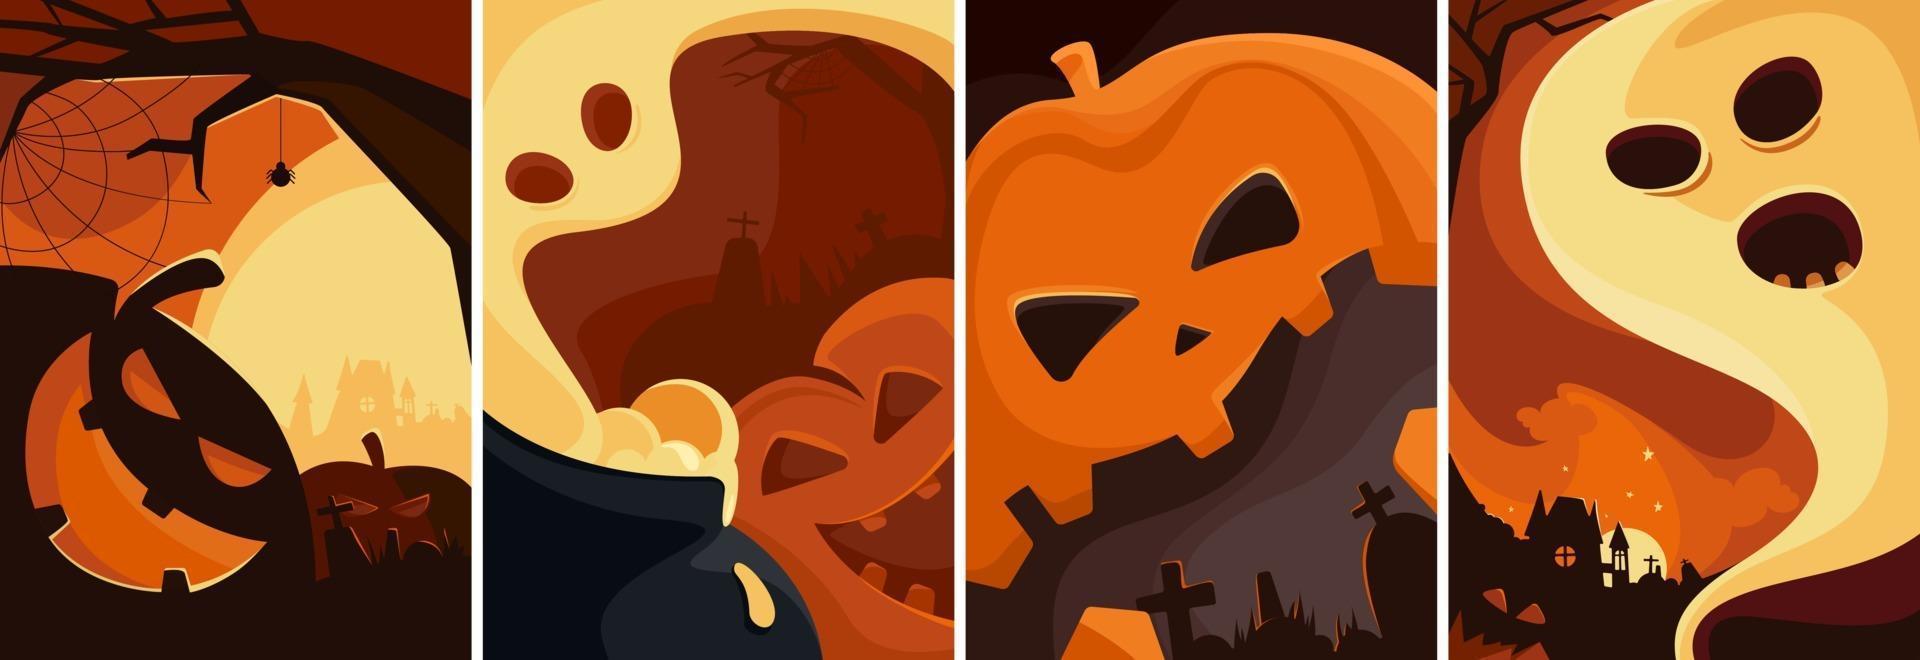 uppsättning halloween affischer. olika plakatdesigner. vektor